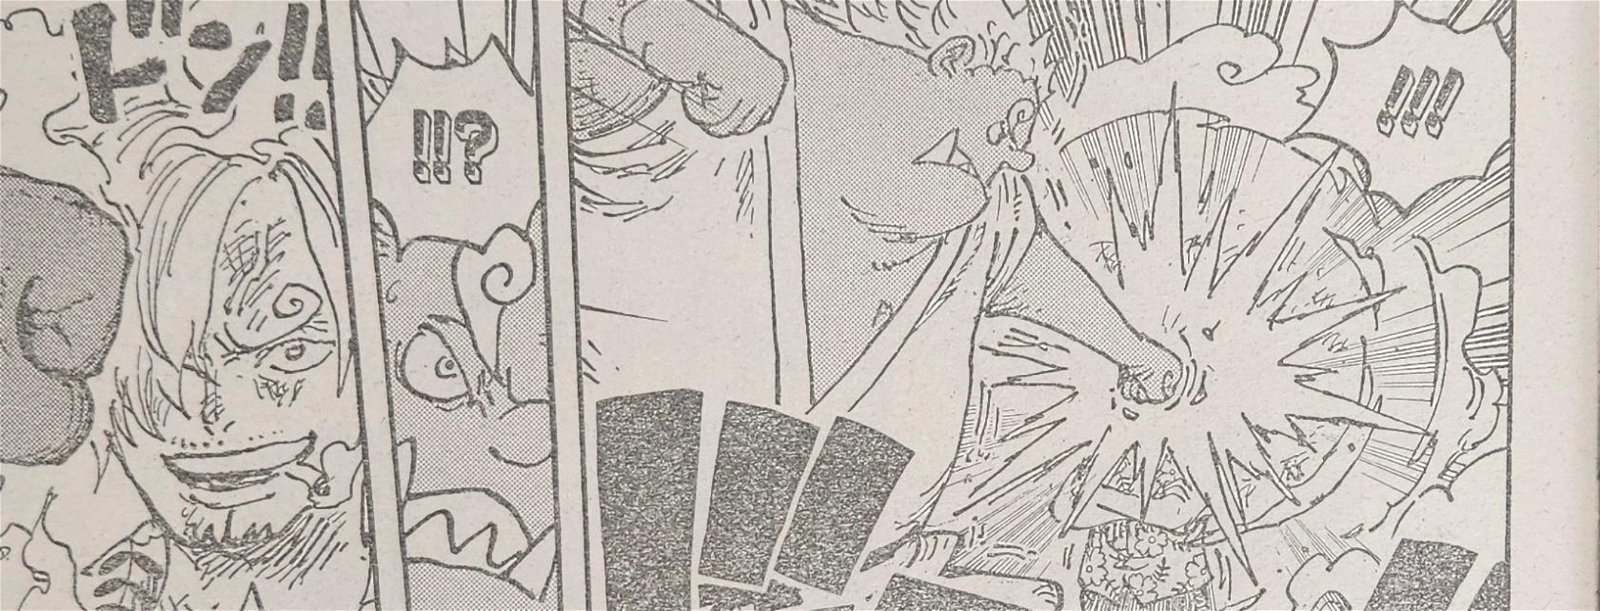 El último número del manga de One Piece da a Sanji un glorioso momentazo